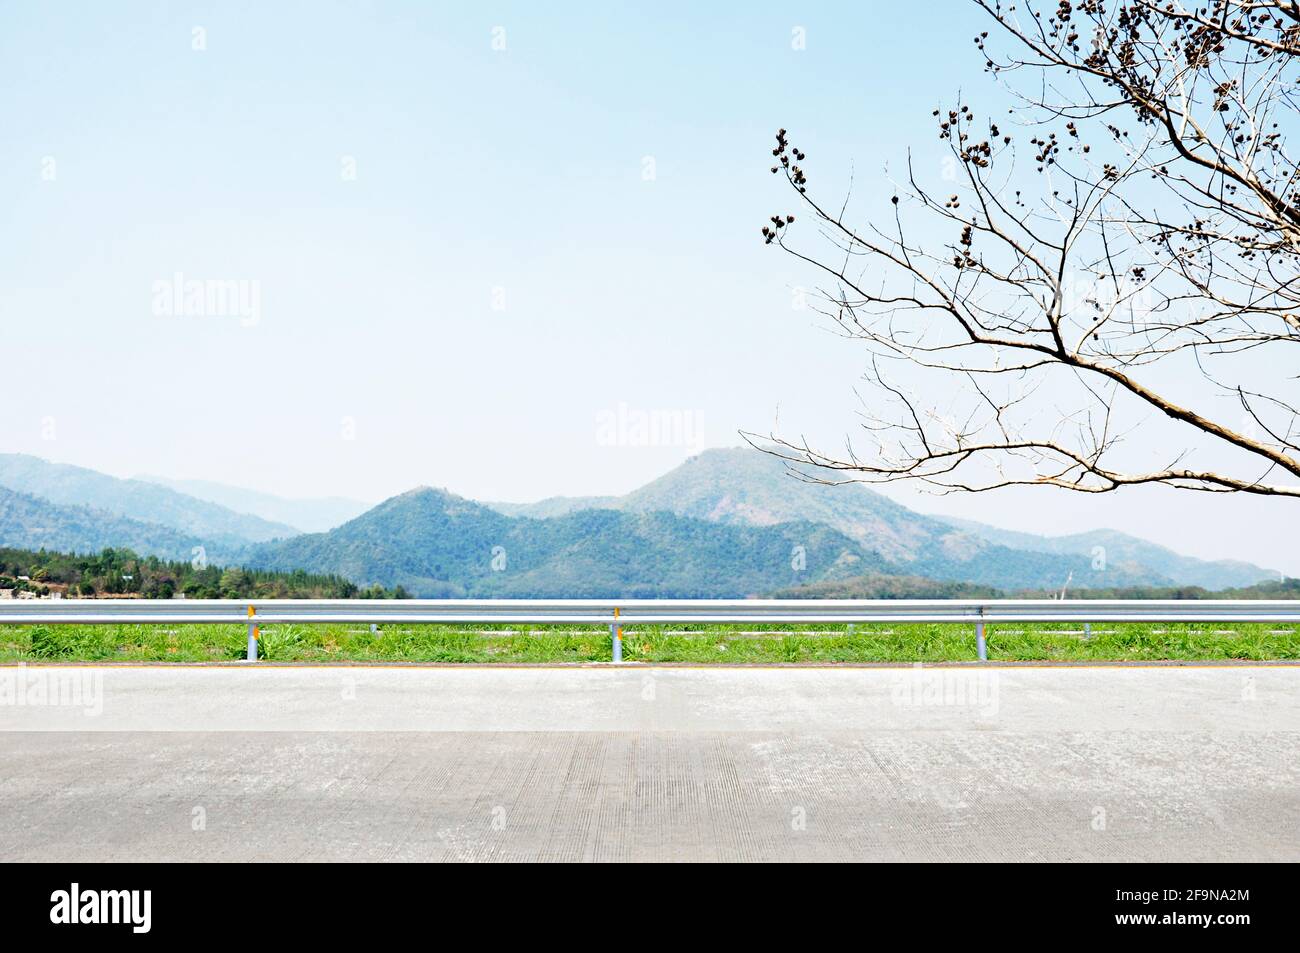 Beautiful mountain scenery - roadside view Stock Photo